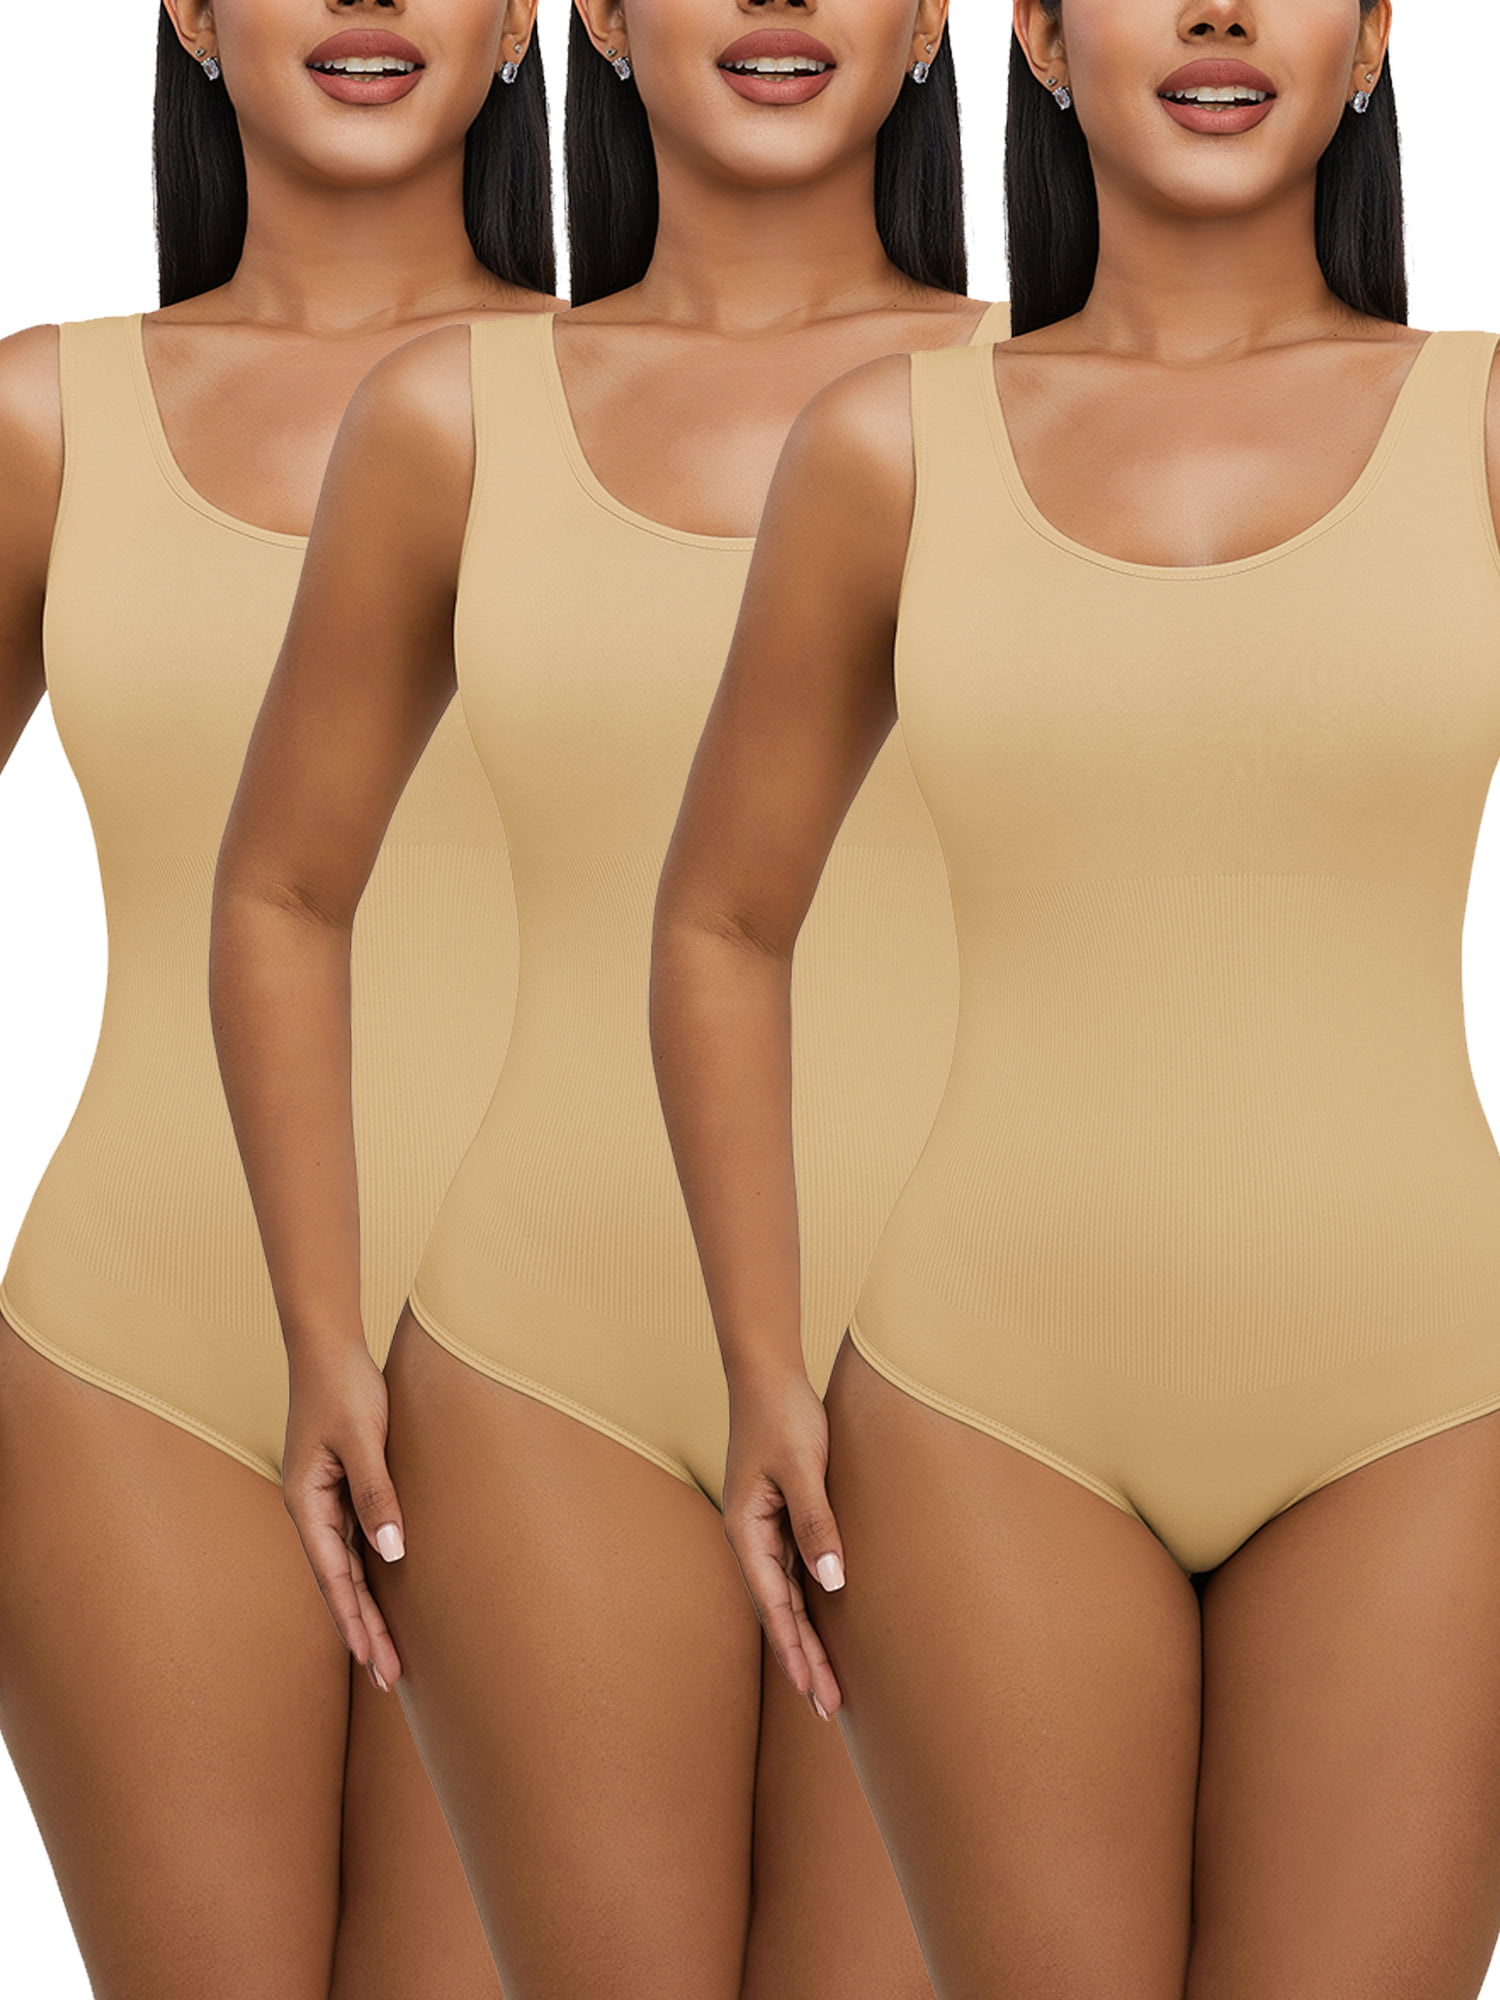 YouLoveIt Bodyshaper Bodysuit for Women Body Shapewear Body Suits